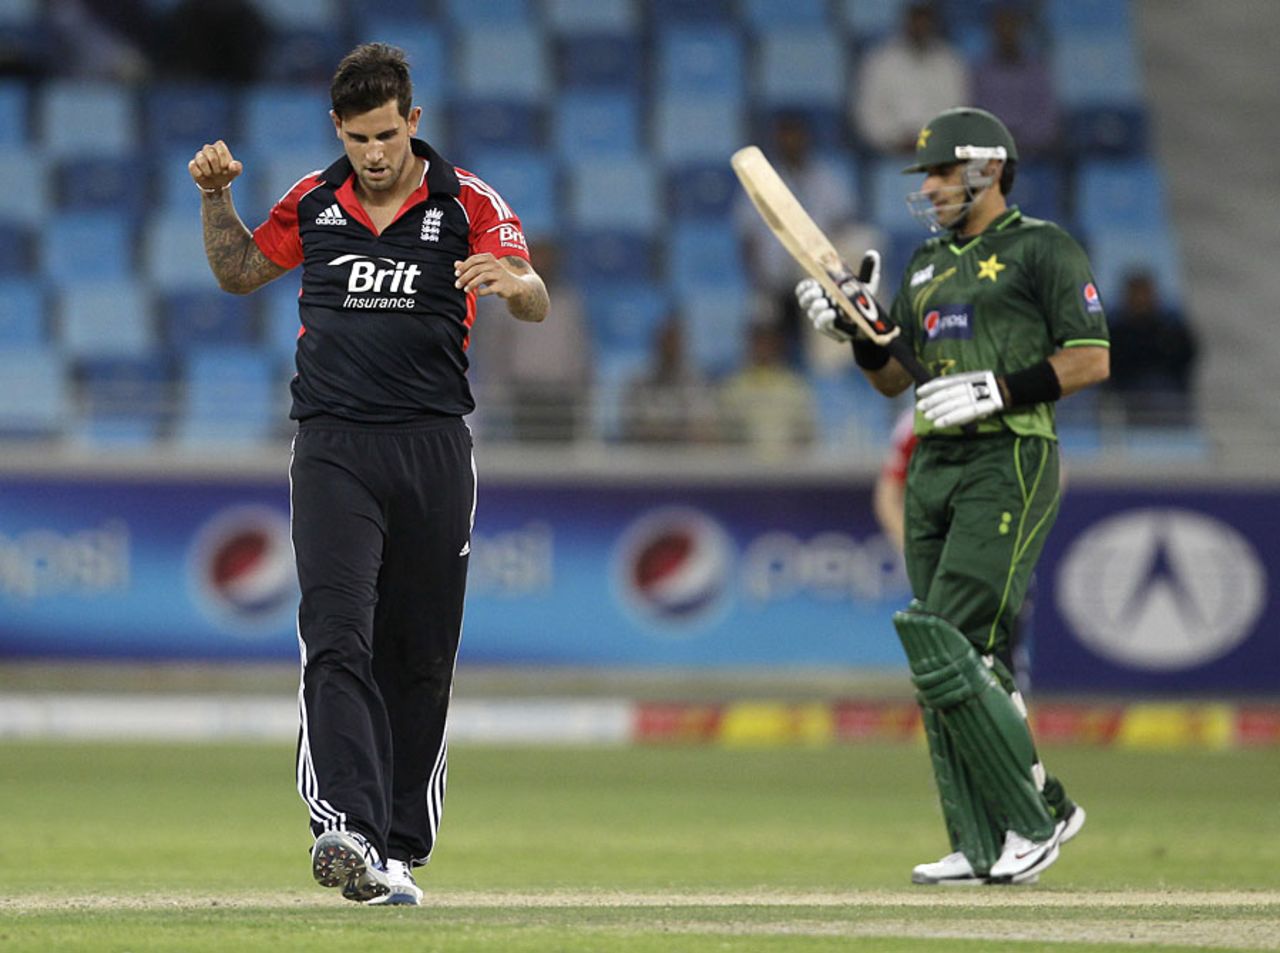 Jade Dernbach ended with 4 for 45 on his comeback, Pakistan v England, 4th ODI, Dubai, February 21, 2012